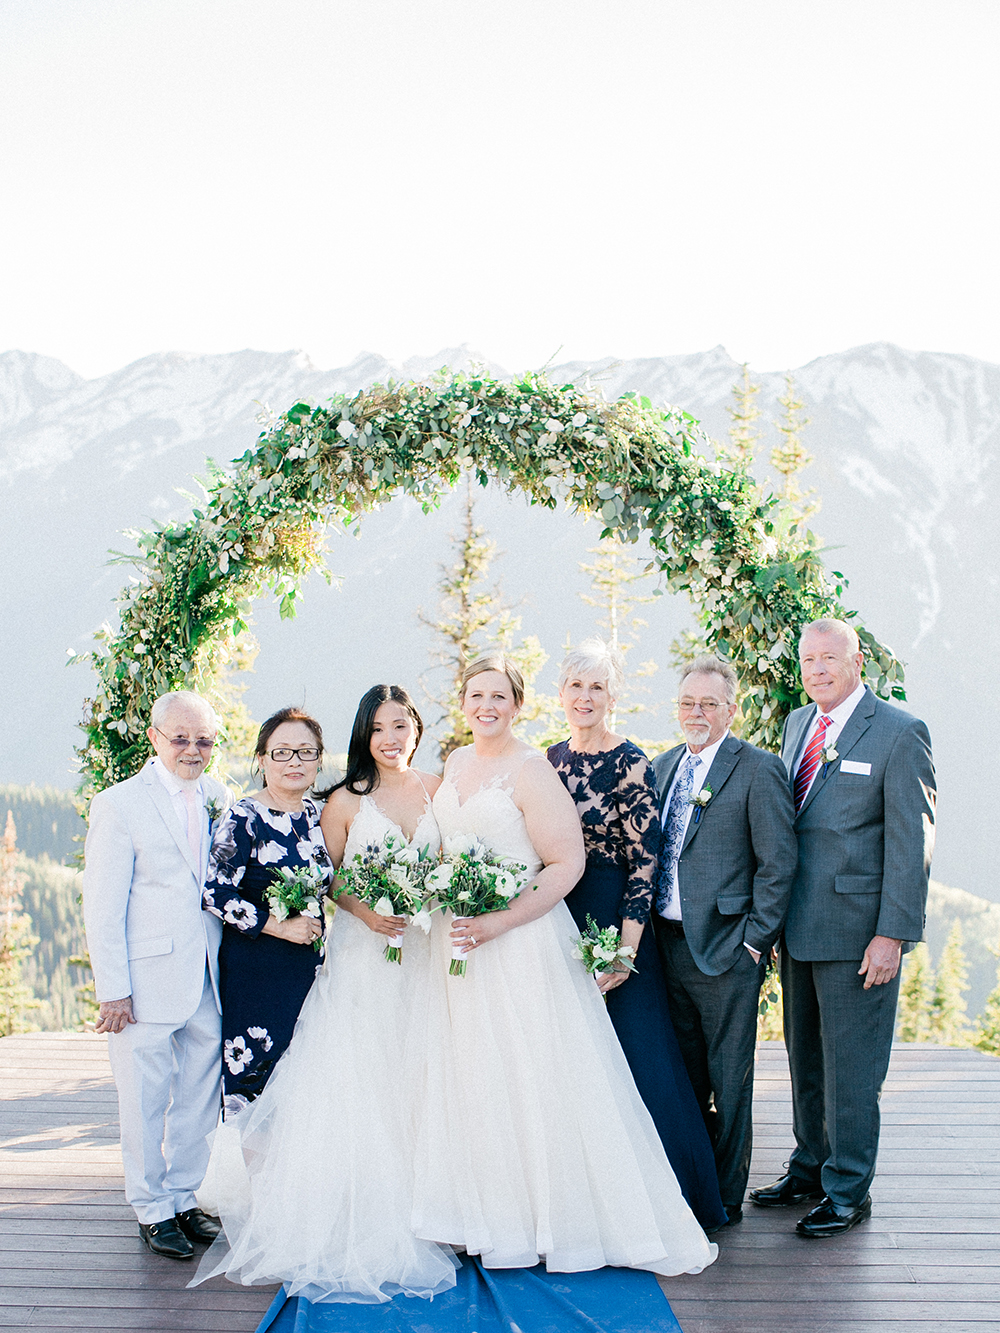 Luna de Mare Photography, Gold Leaf Events, Aspen Branch, Aspen Wedding Photographer, The Little Nell wedding photos